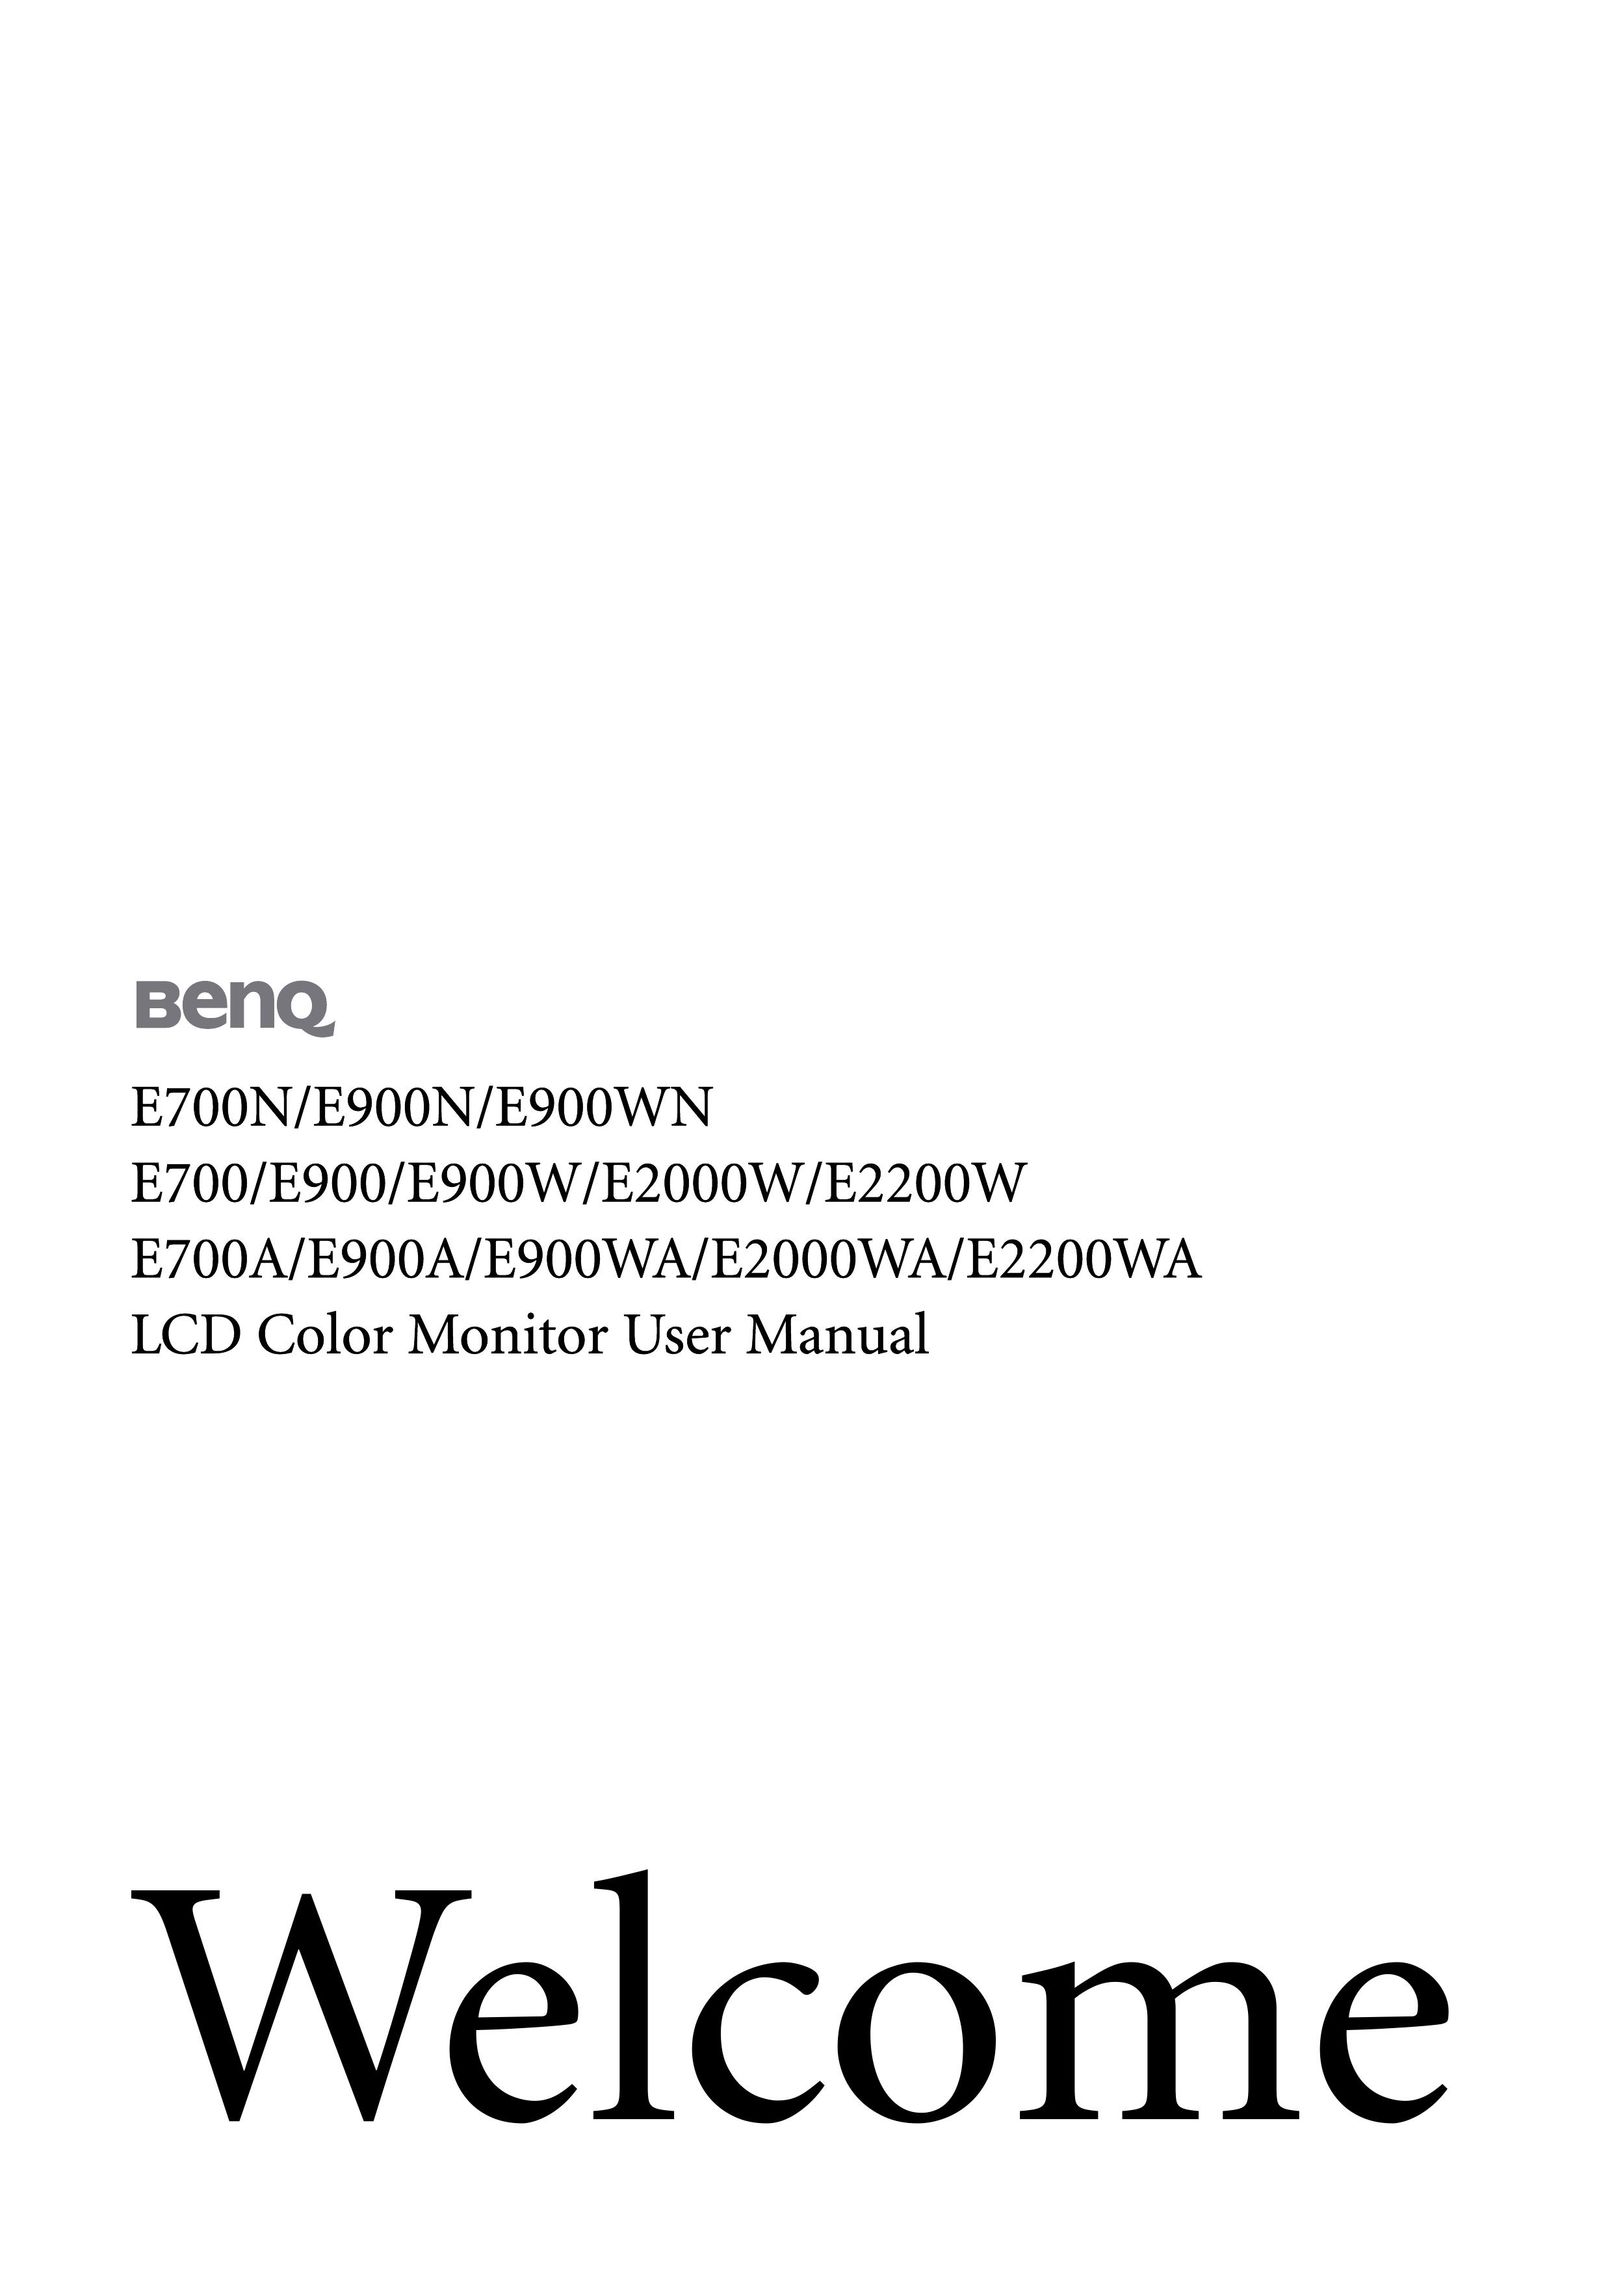 BenQ E700 Computer Monitor User Manual